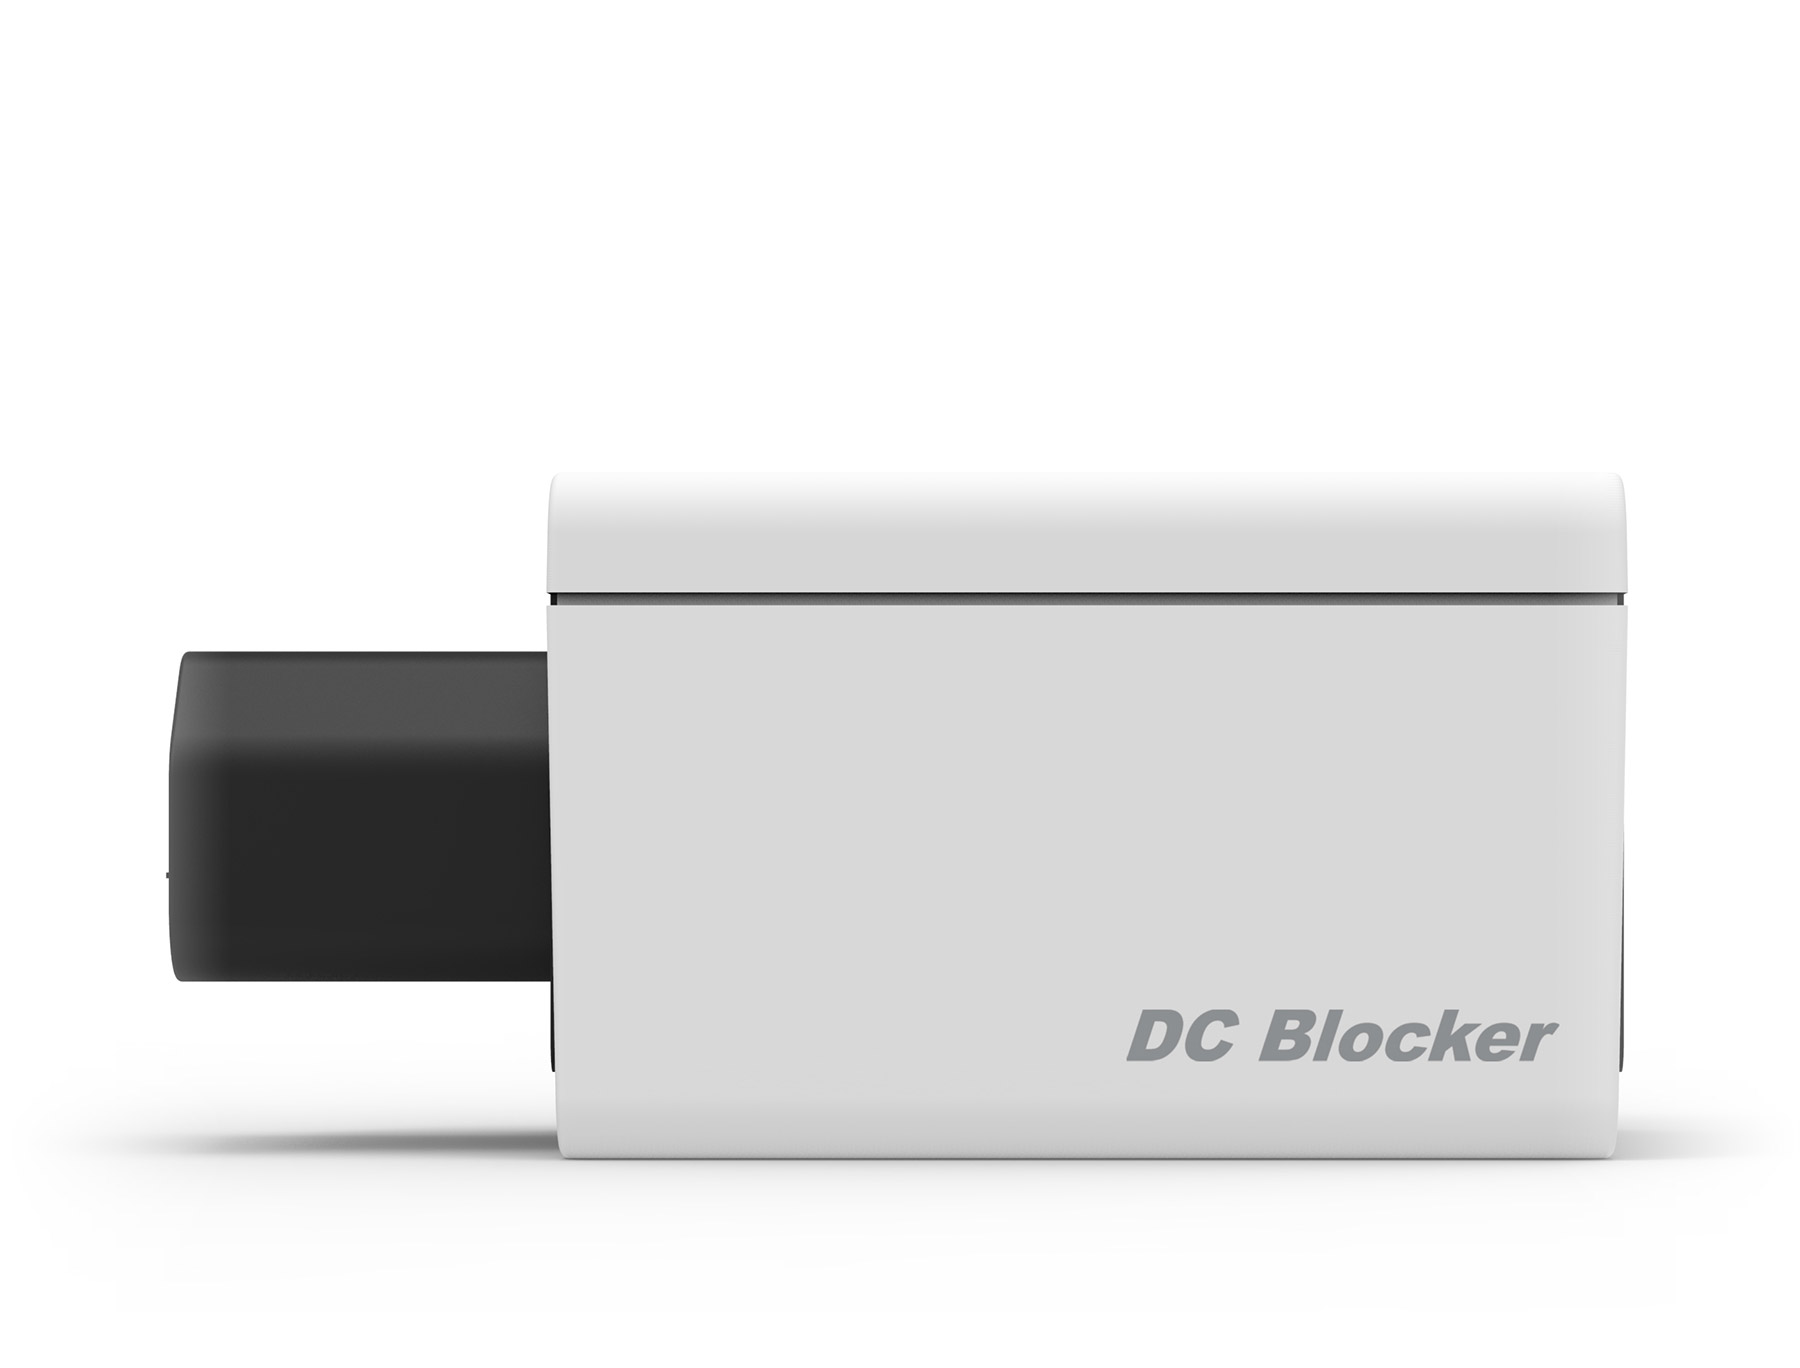 iFi DC Blocker